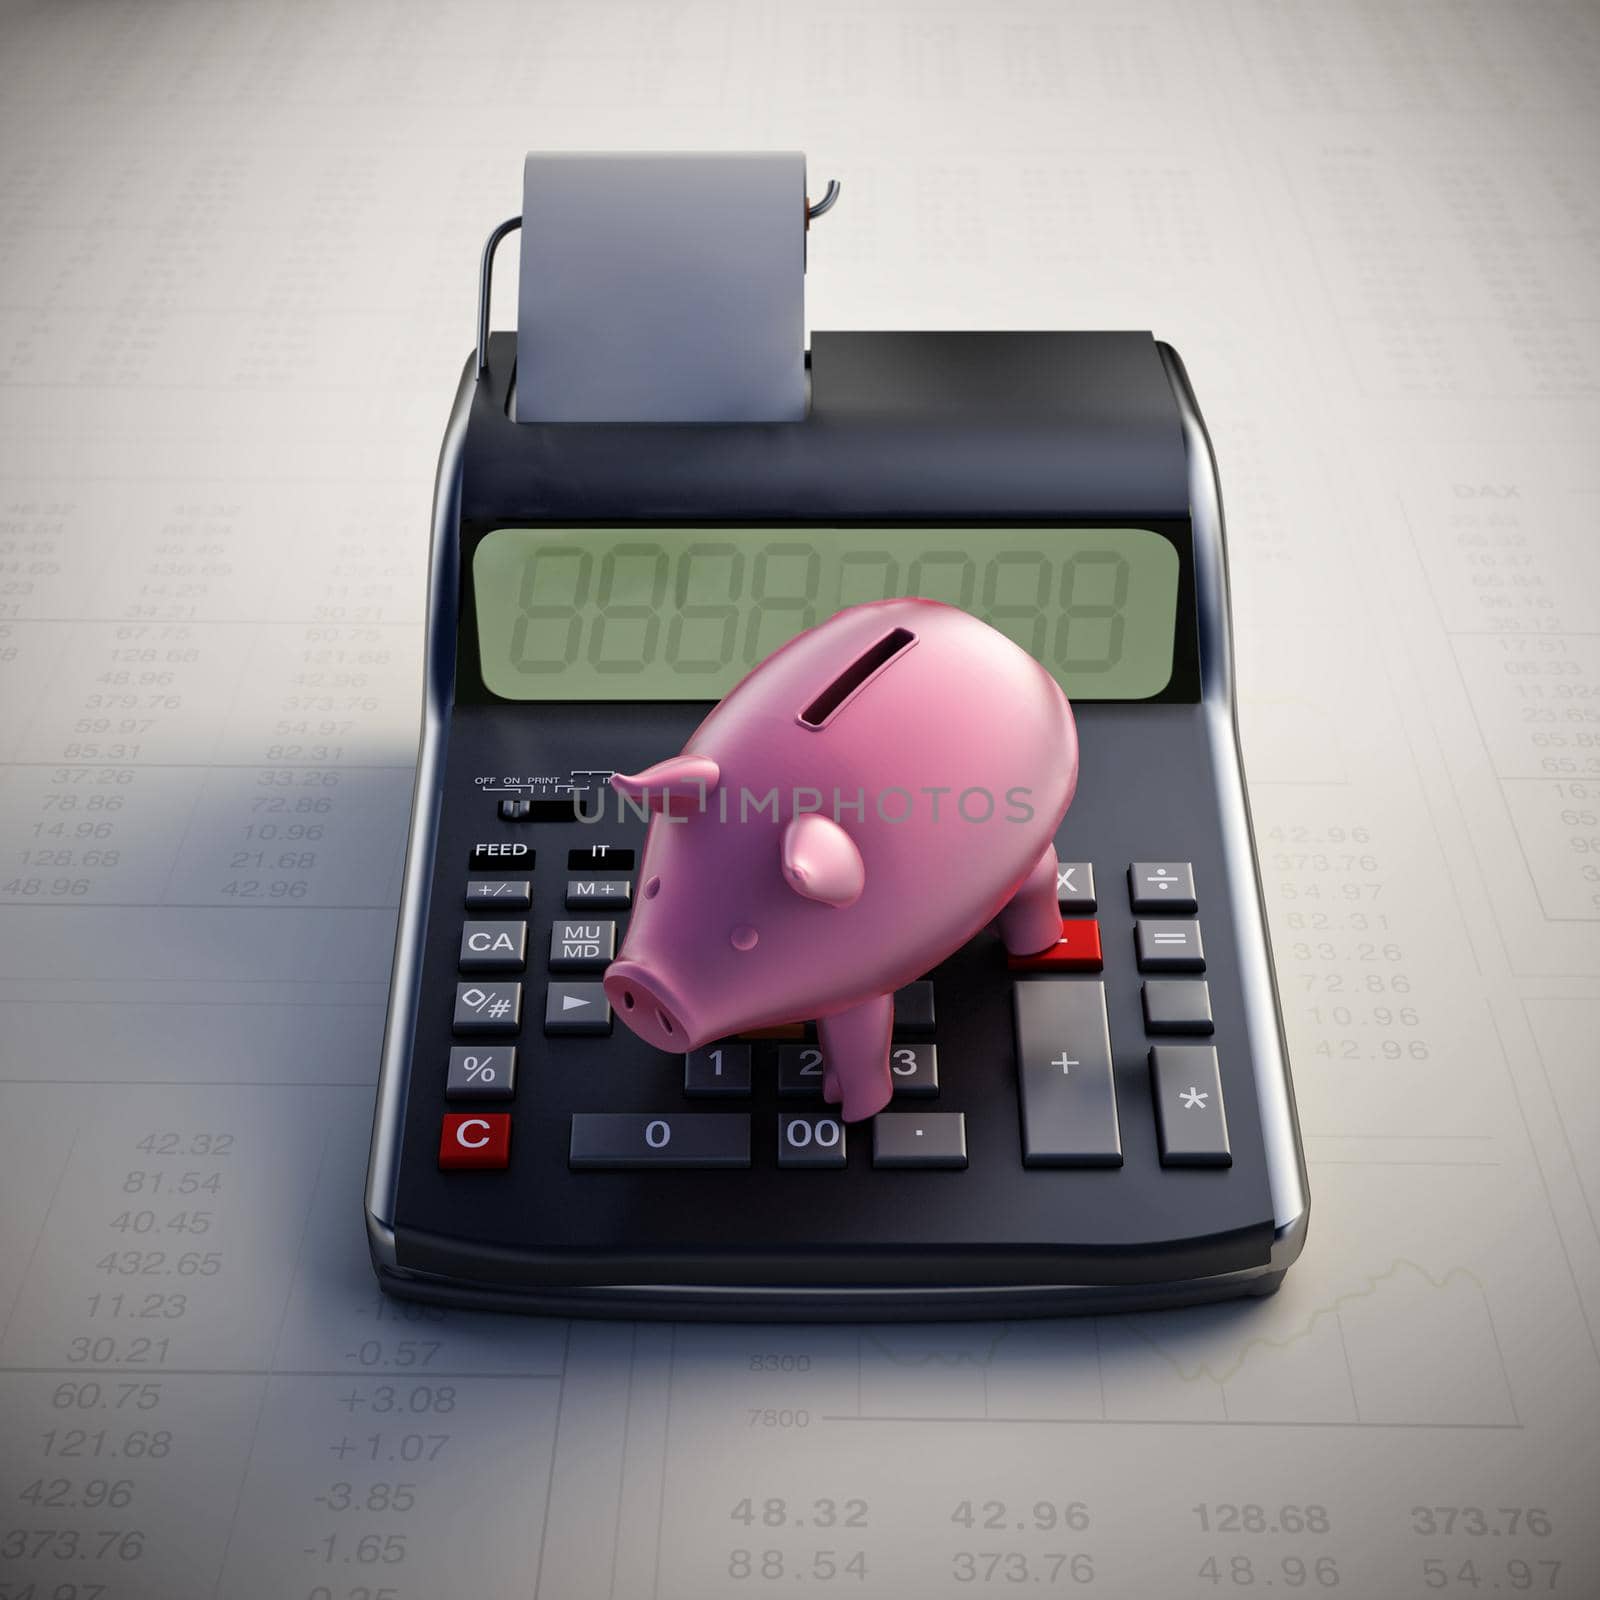 Piggy bank standing on calculator. 3D illustration.